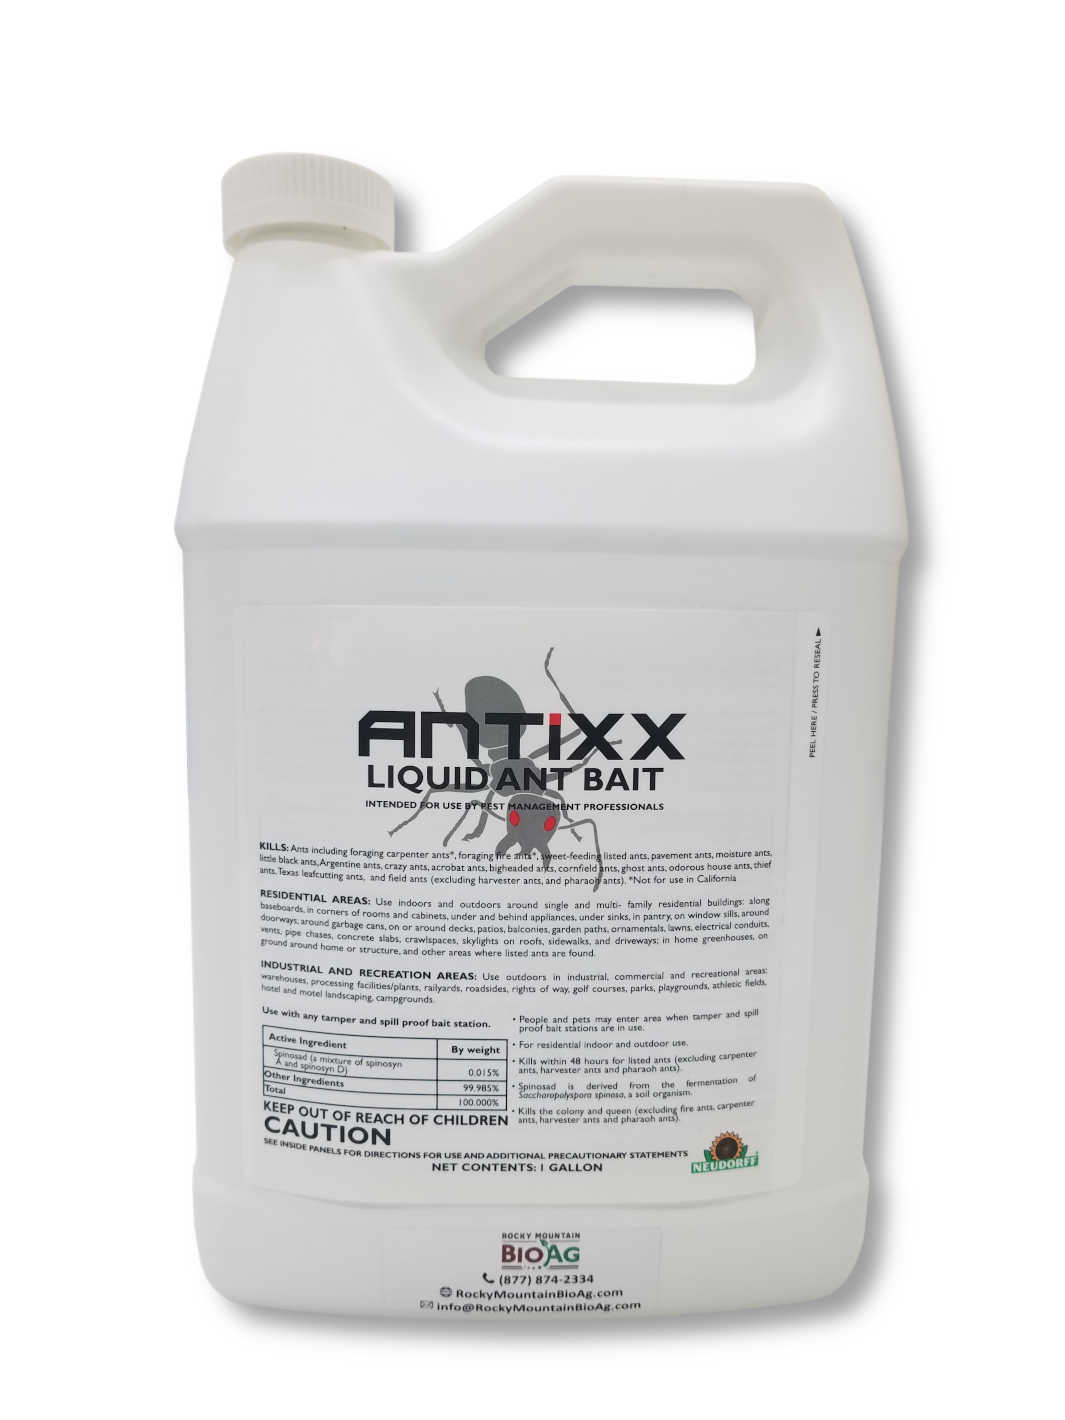 Antixx Liquid Ant Bait in 1 Gallon Bottle